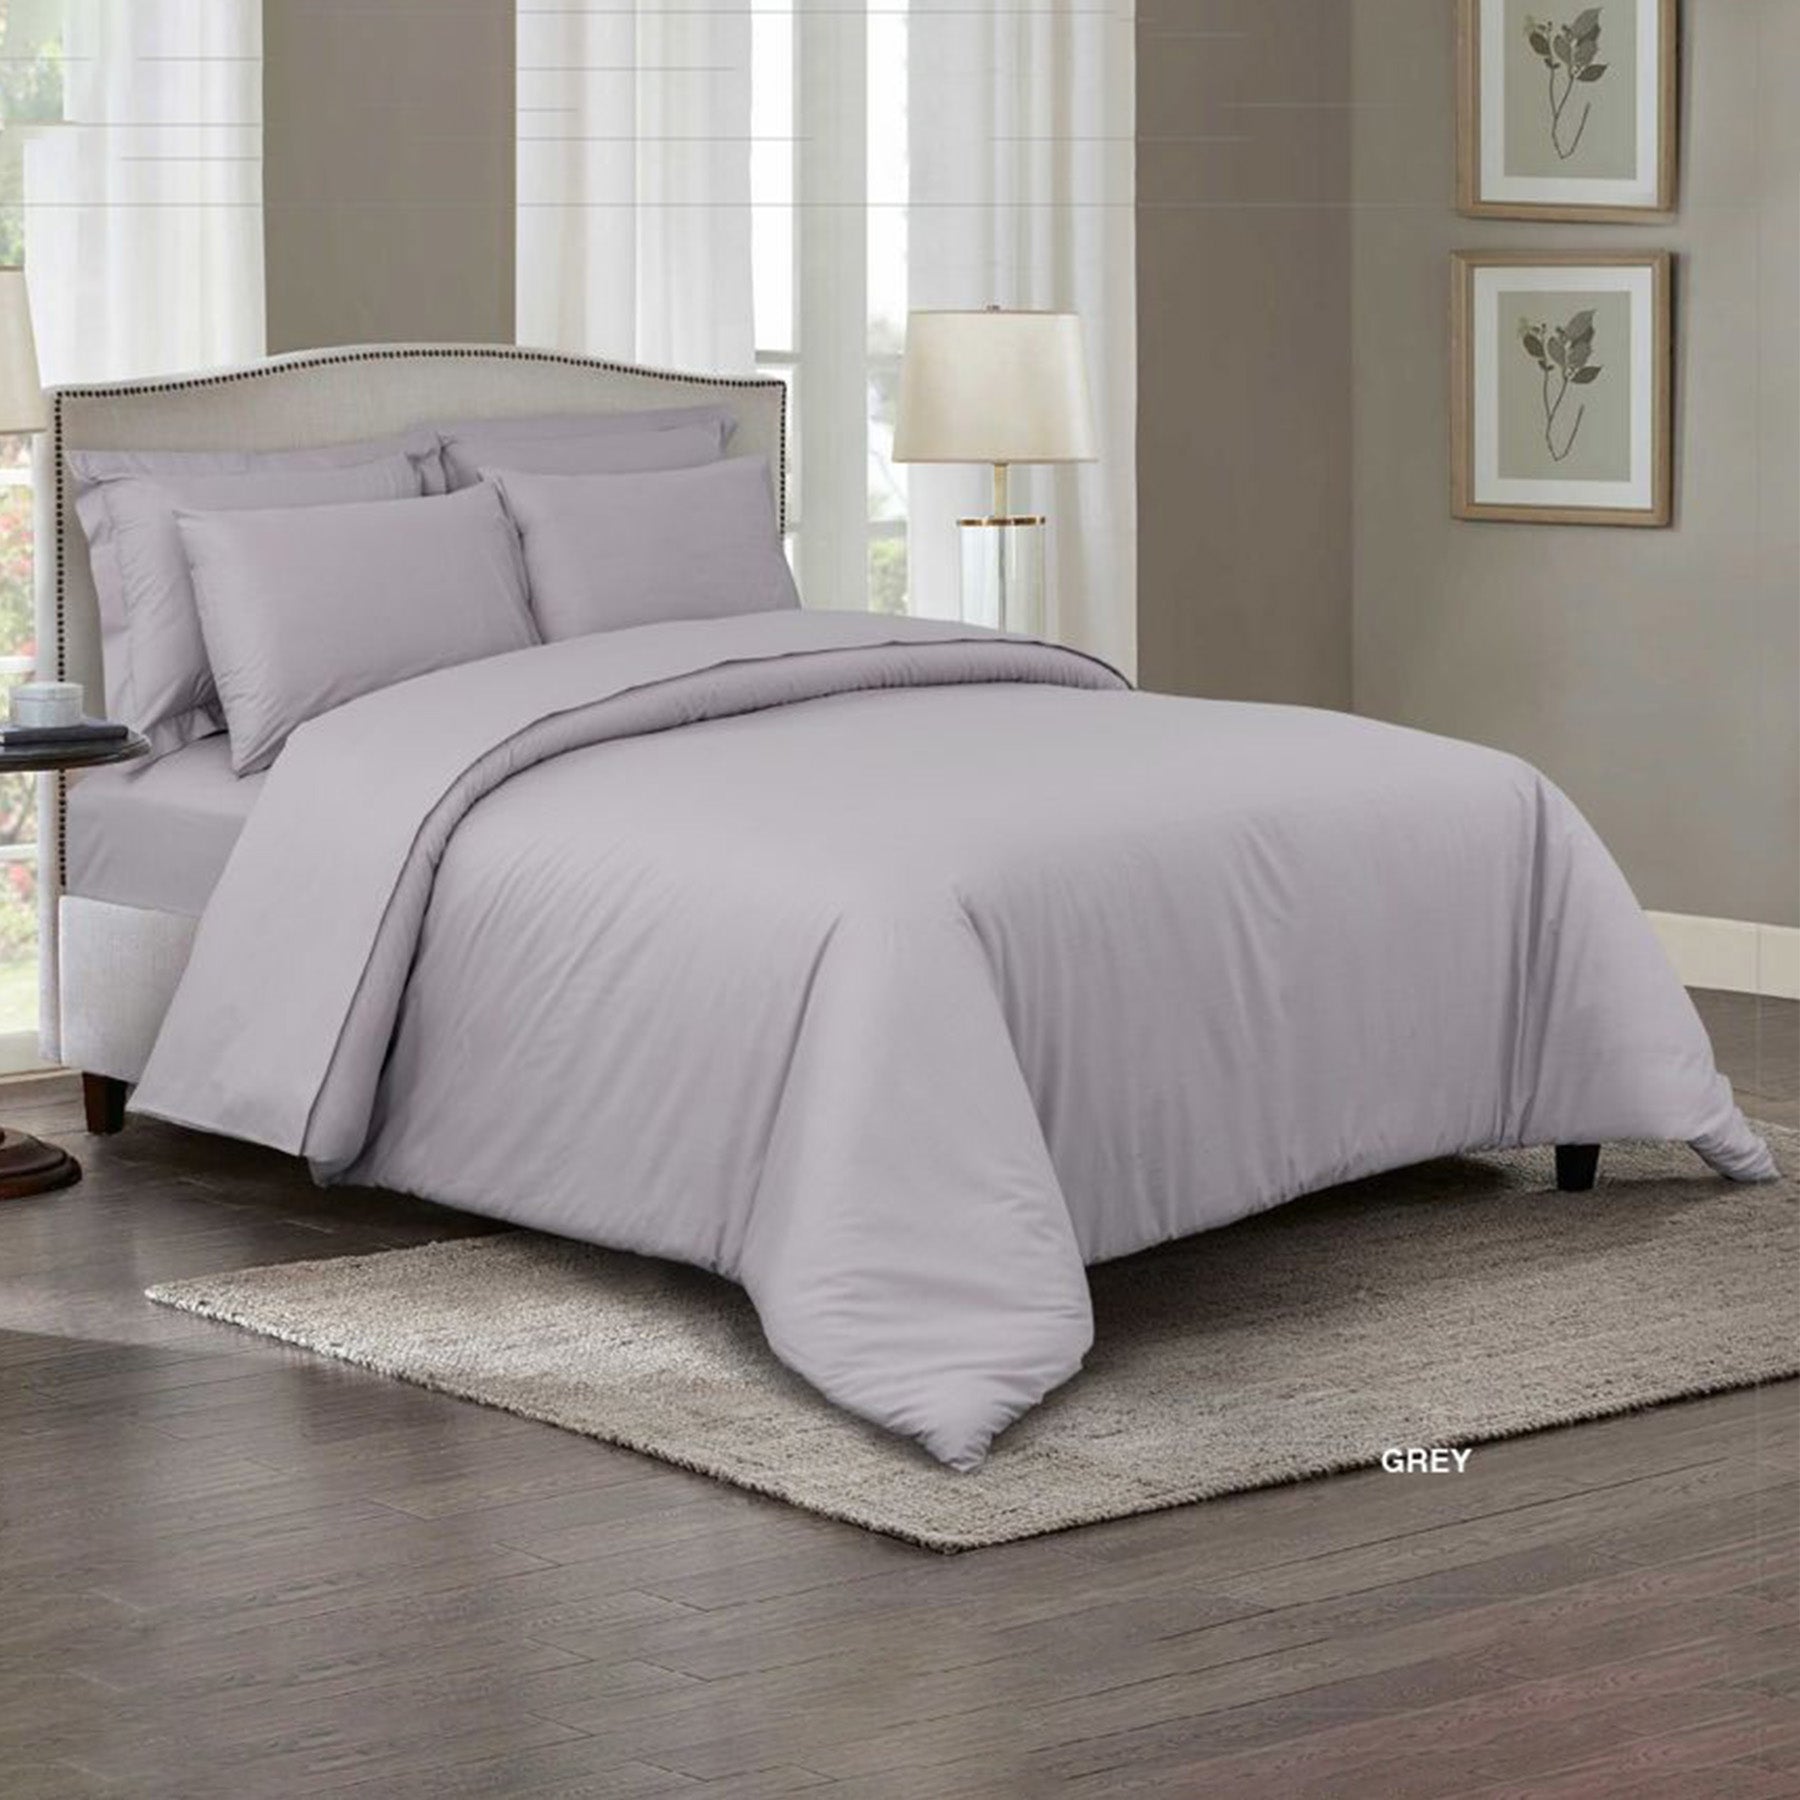 King Plain Comforter Set - CANNON